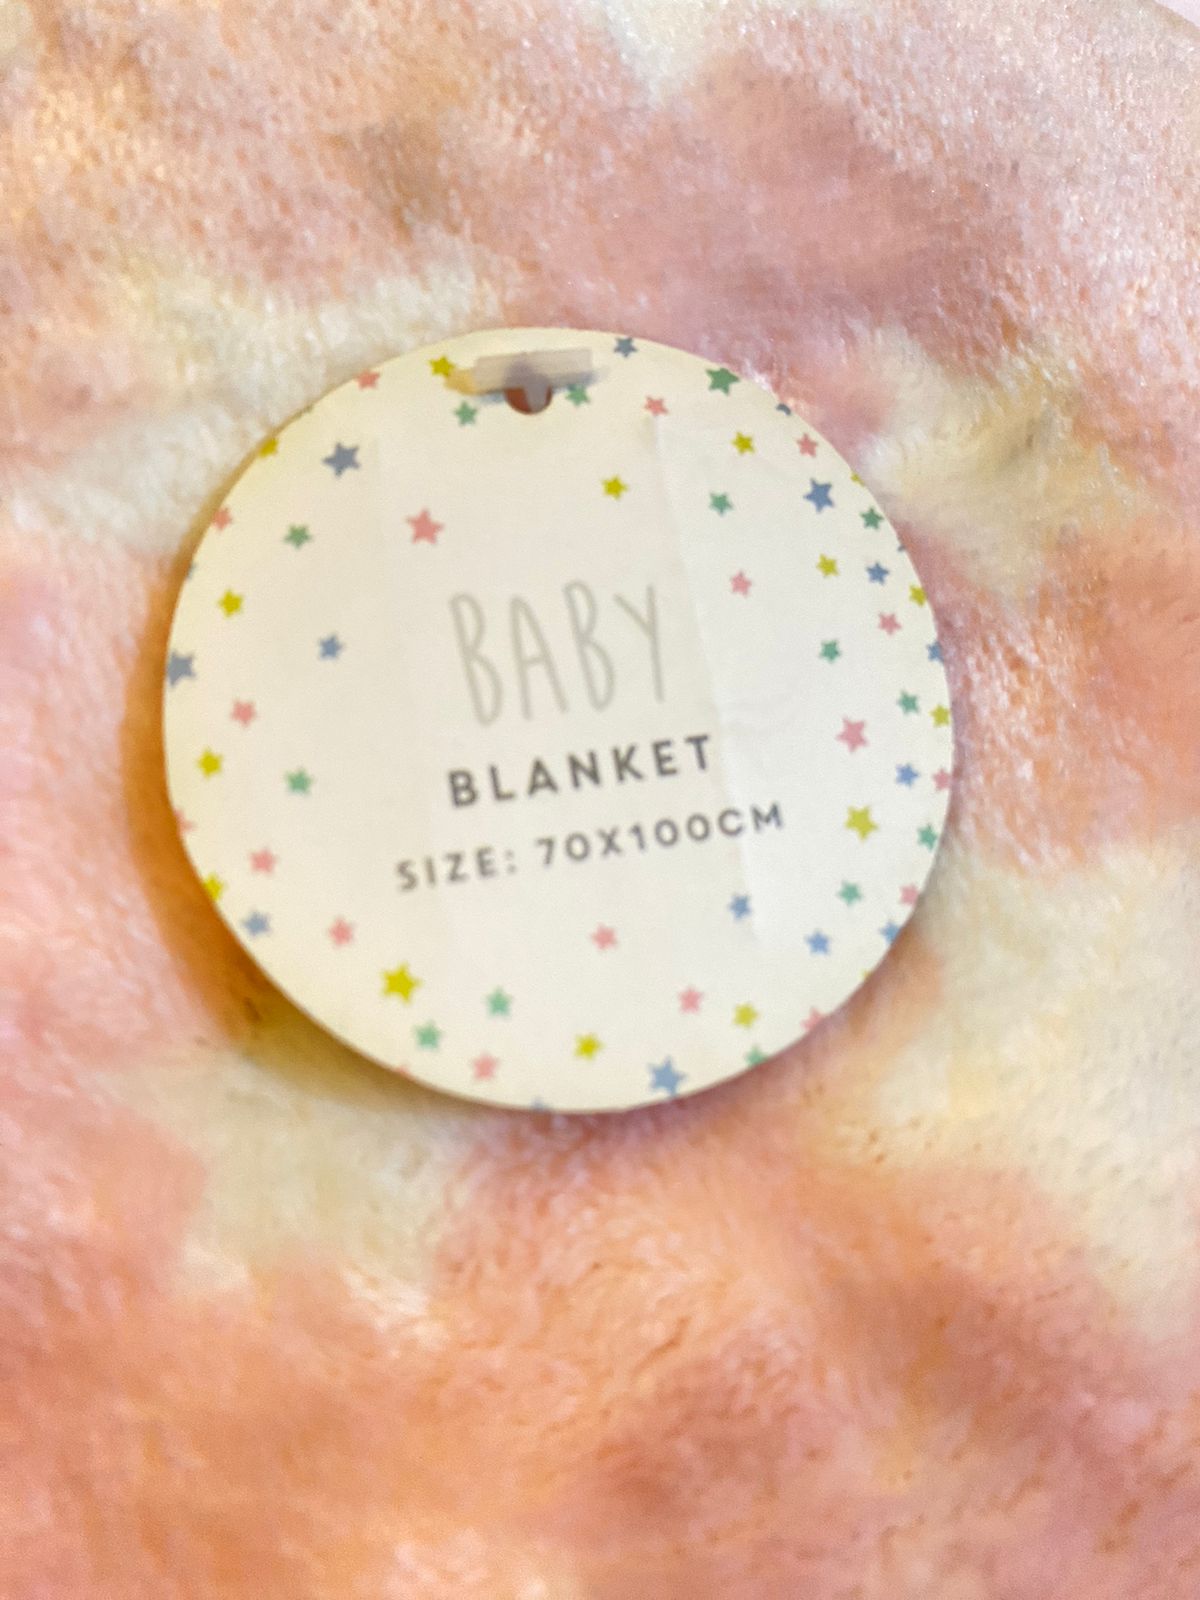 baby star blanket